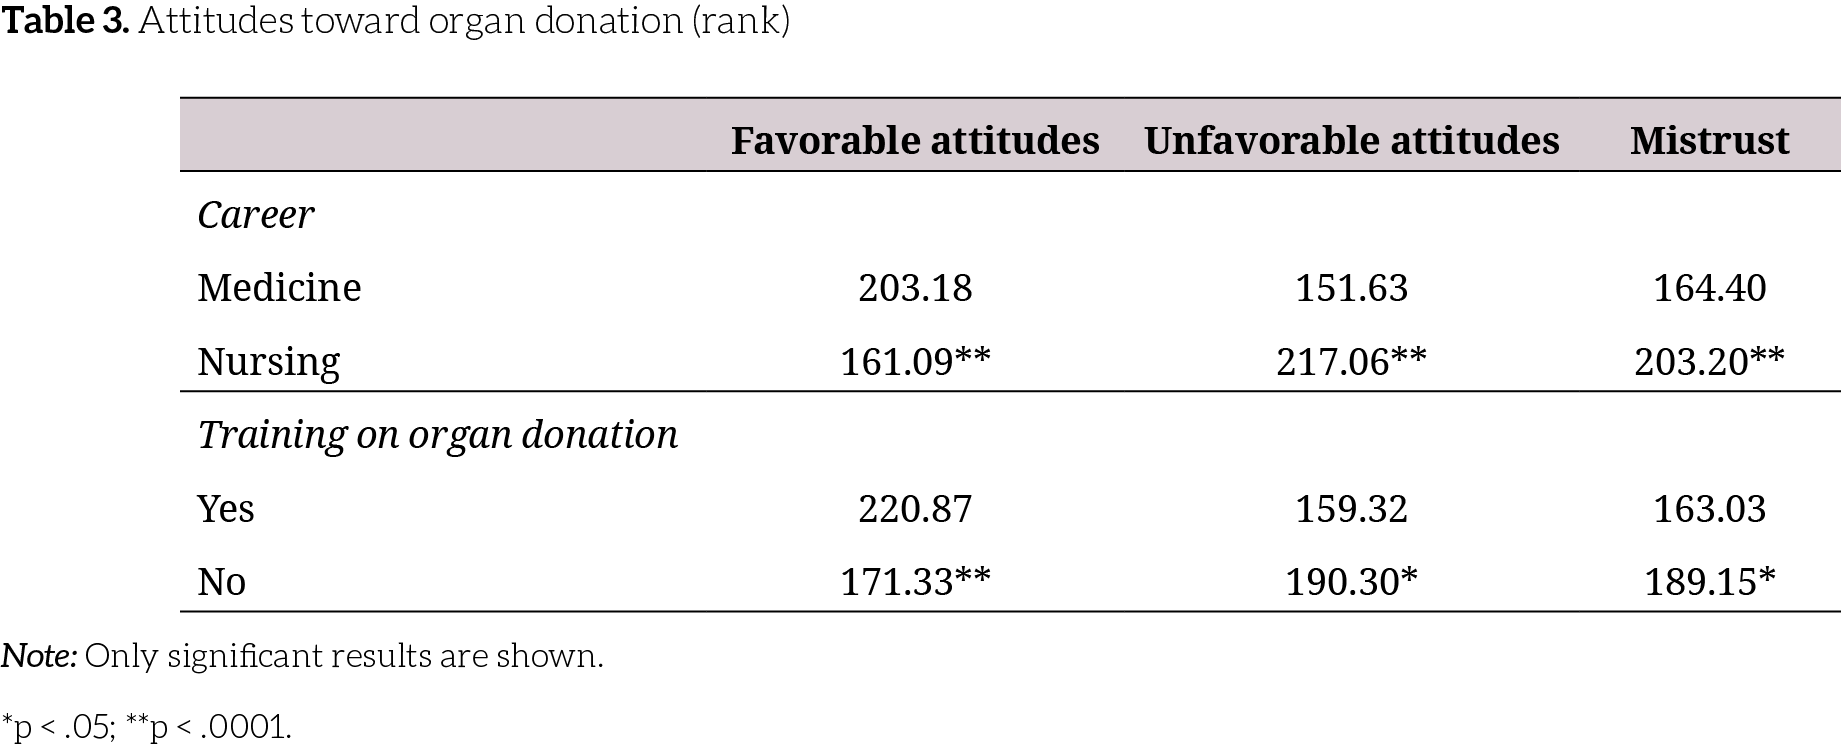 Attitudes toward organ donation (rank)